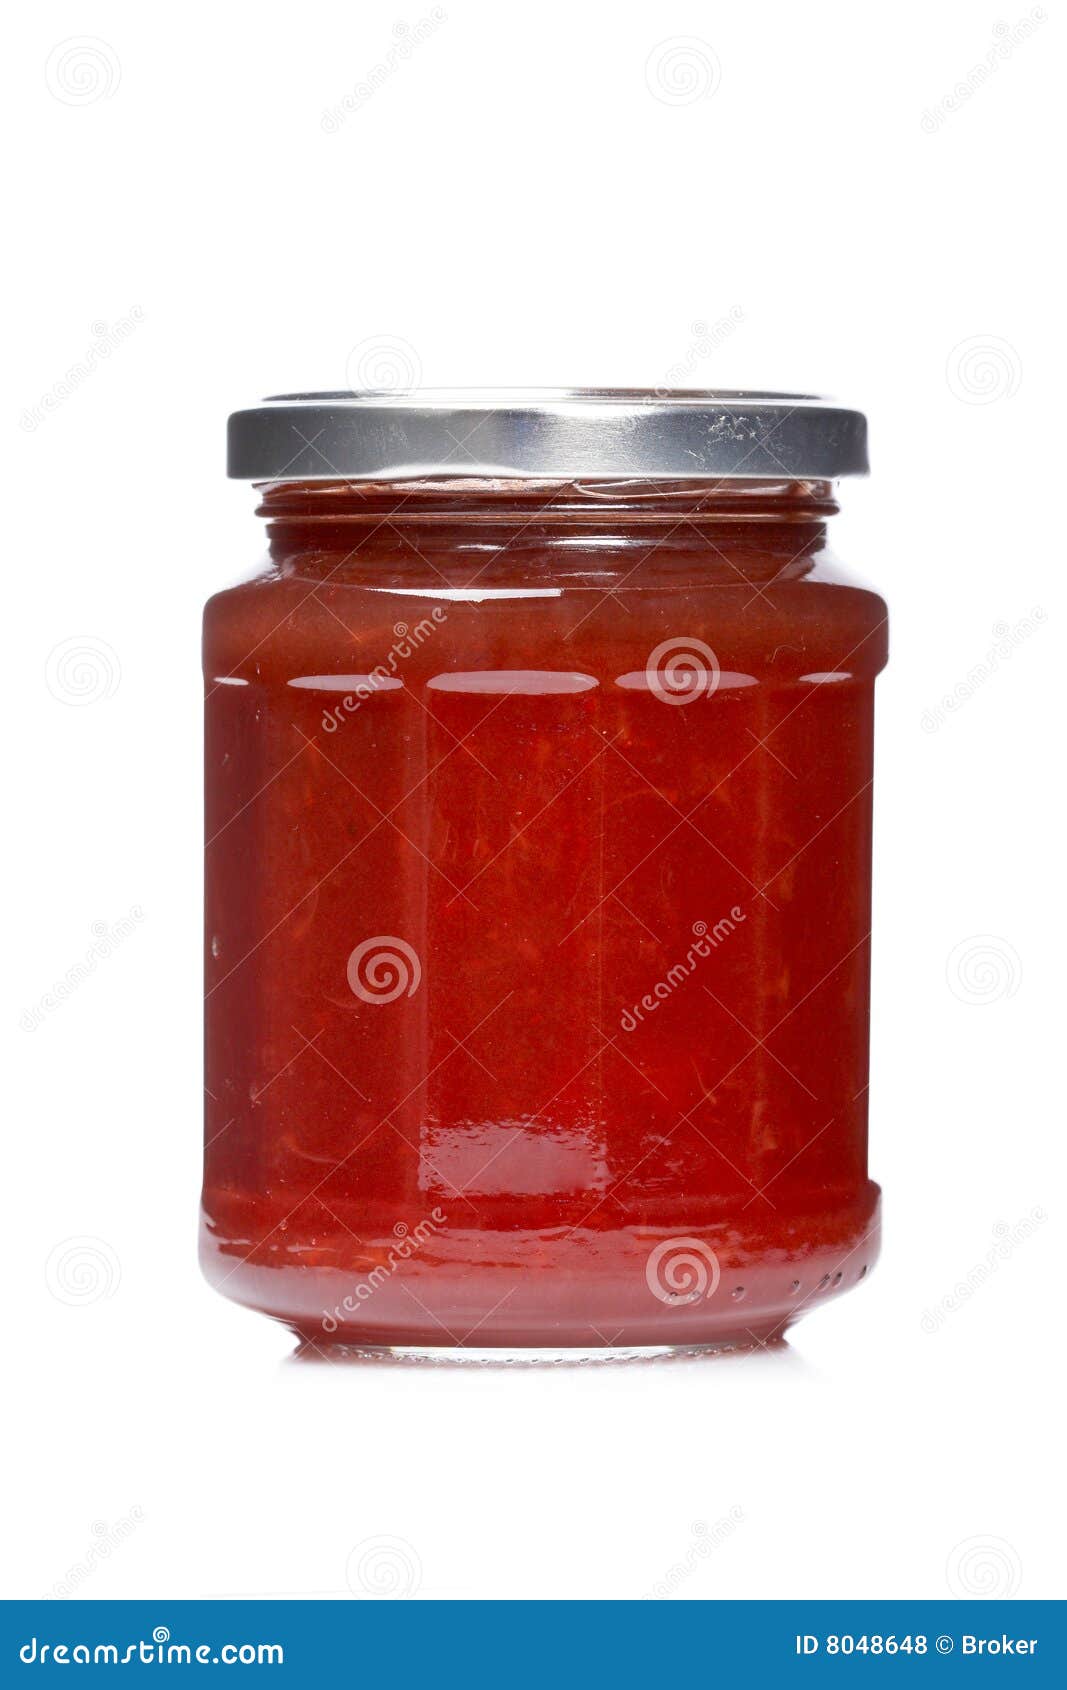 strawberry jam glass jar